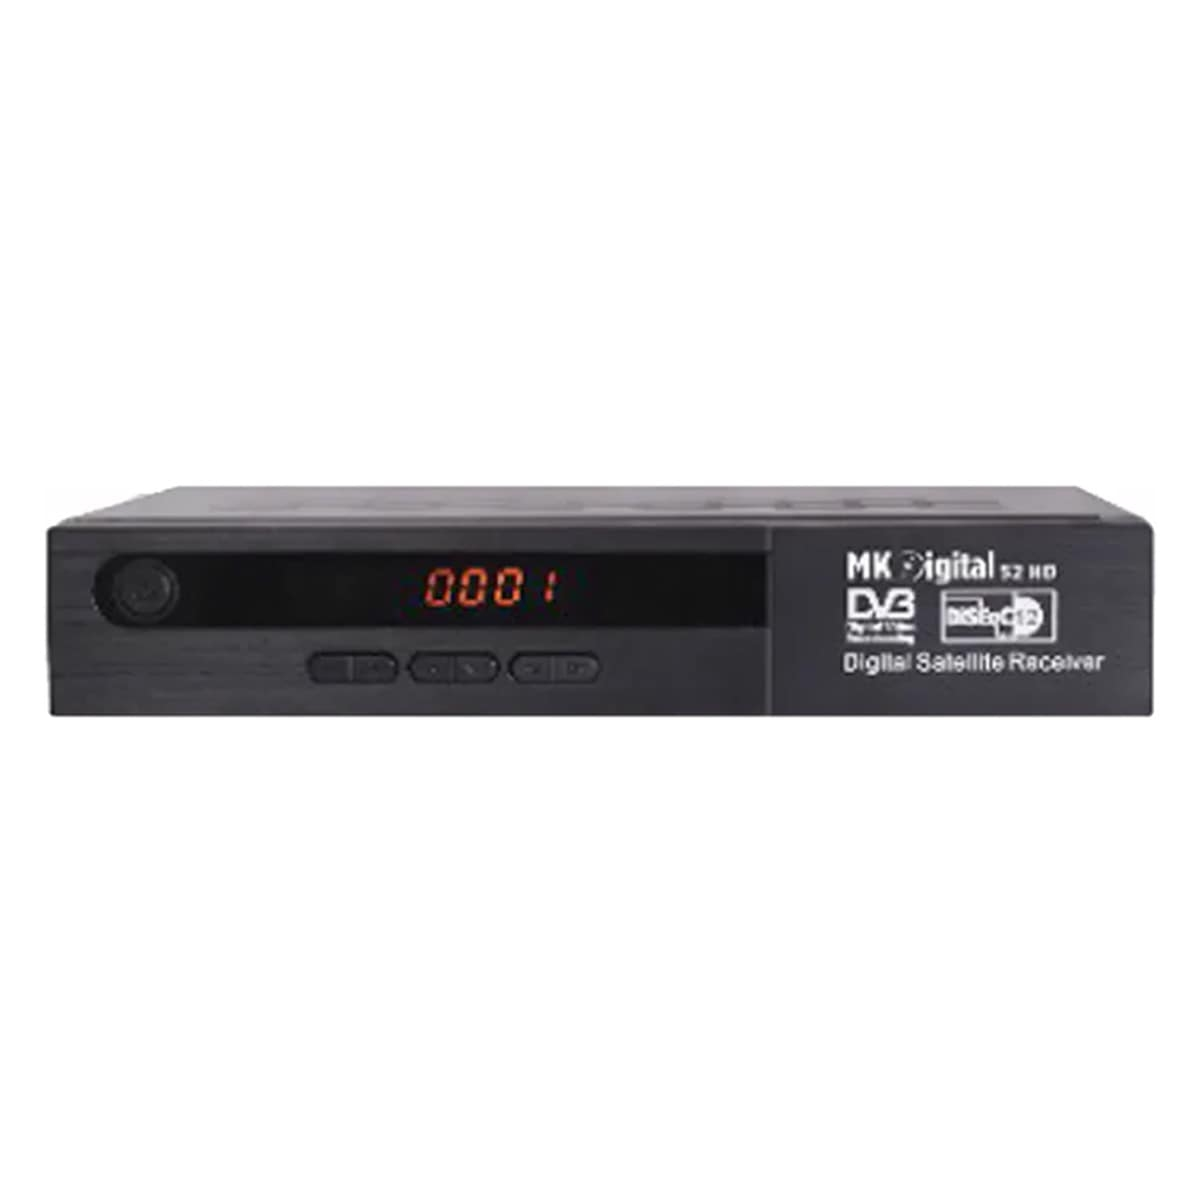 MK-DIGITAL S2 Sat-Receiver (HDTV, Schwarz) DVB-S2